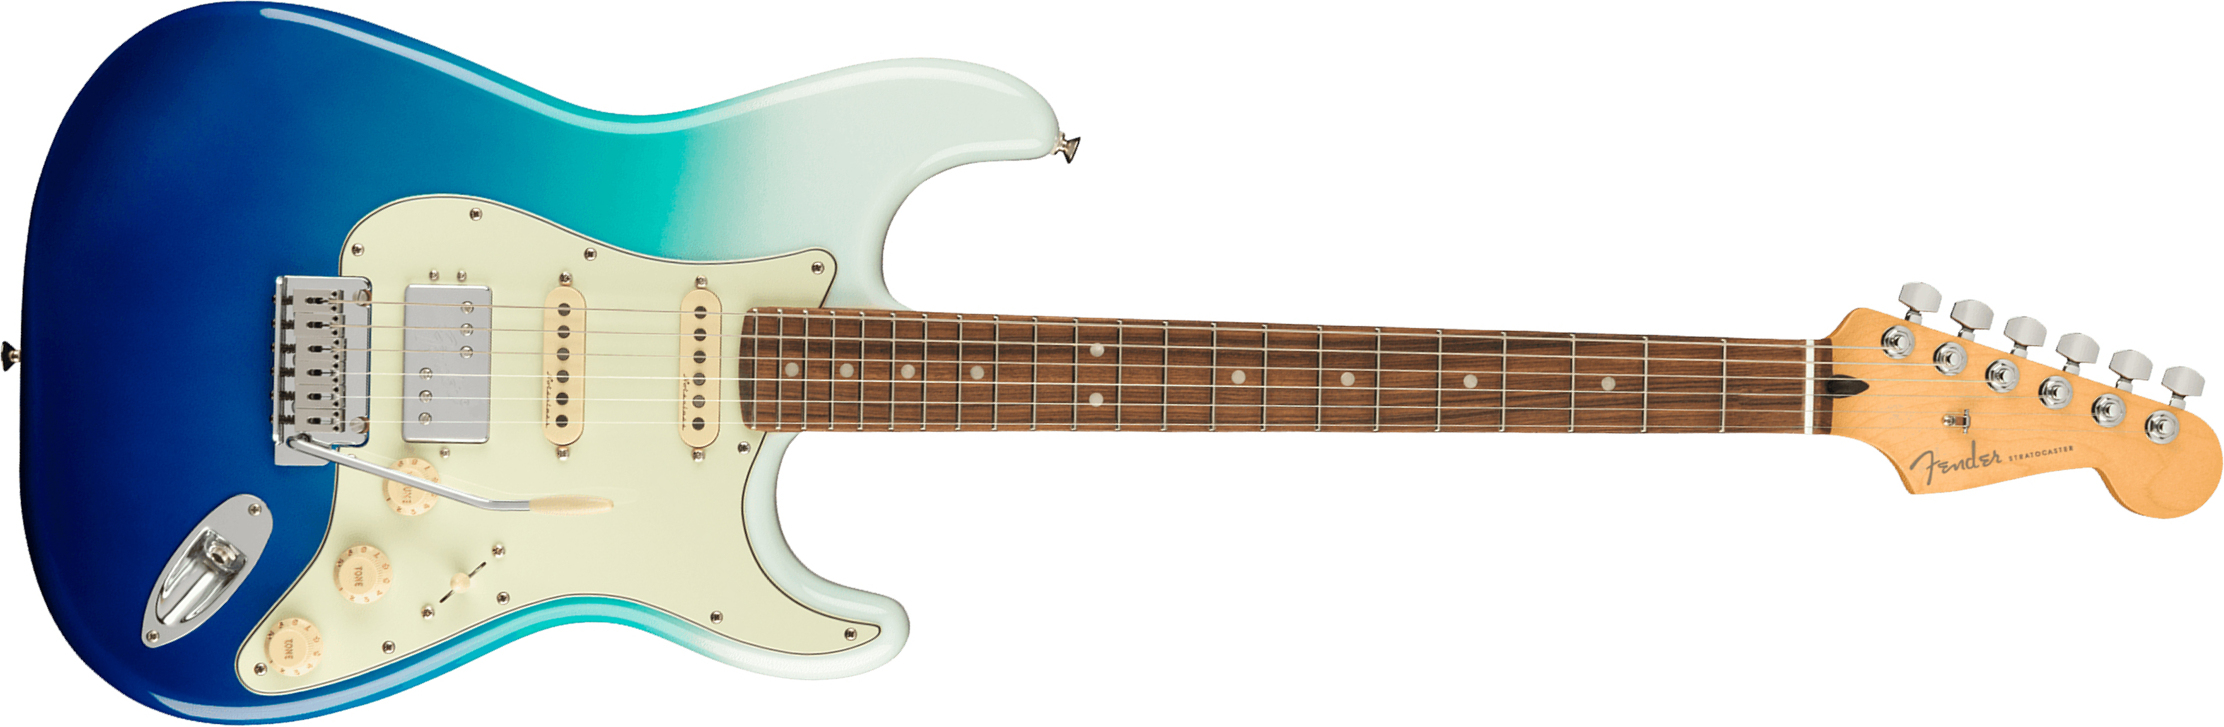 Fender Strat Player Plus Mex Hss Trem Pf - Belair Blue - E-Gitarre in Str-Form - Main picture